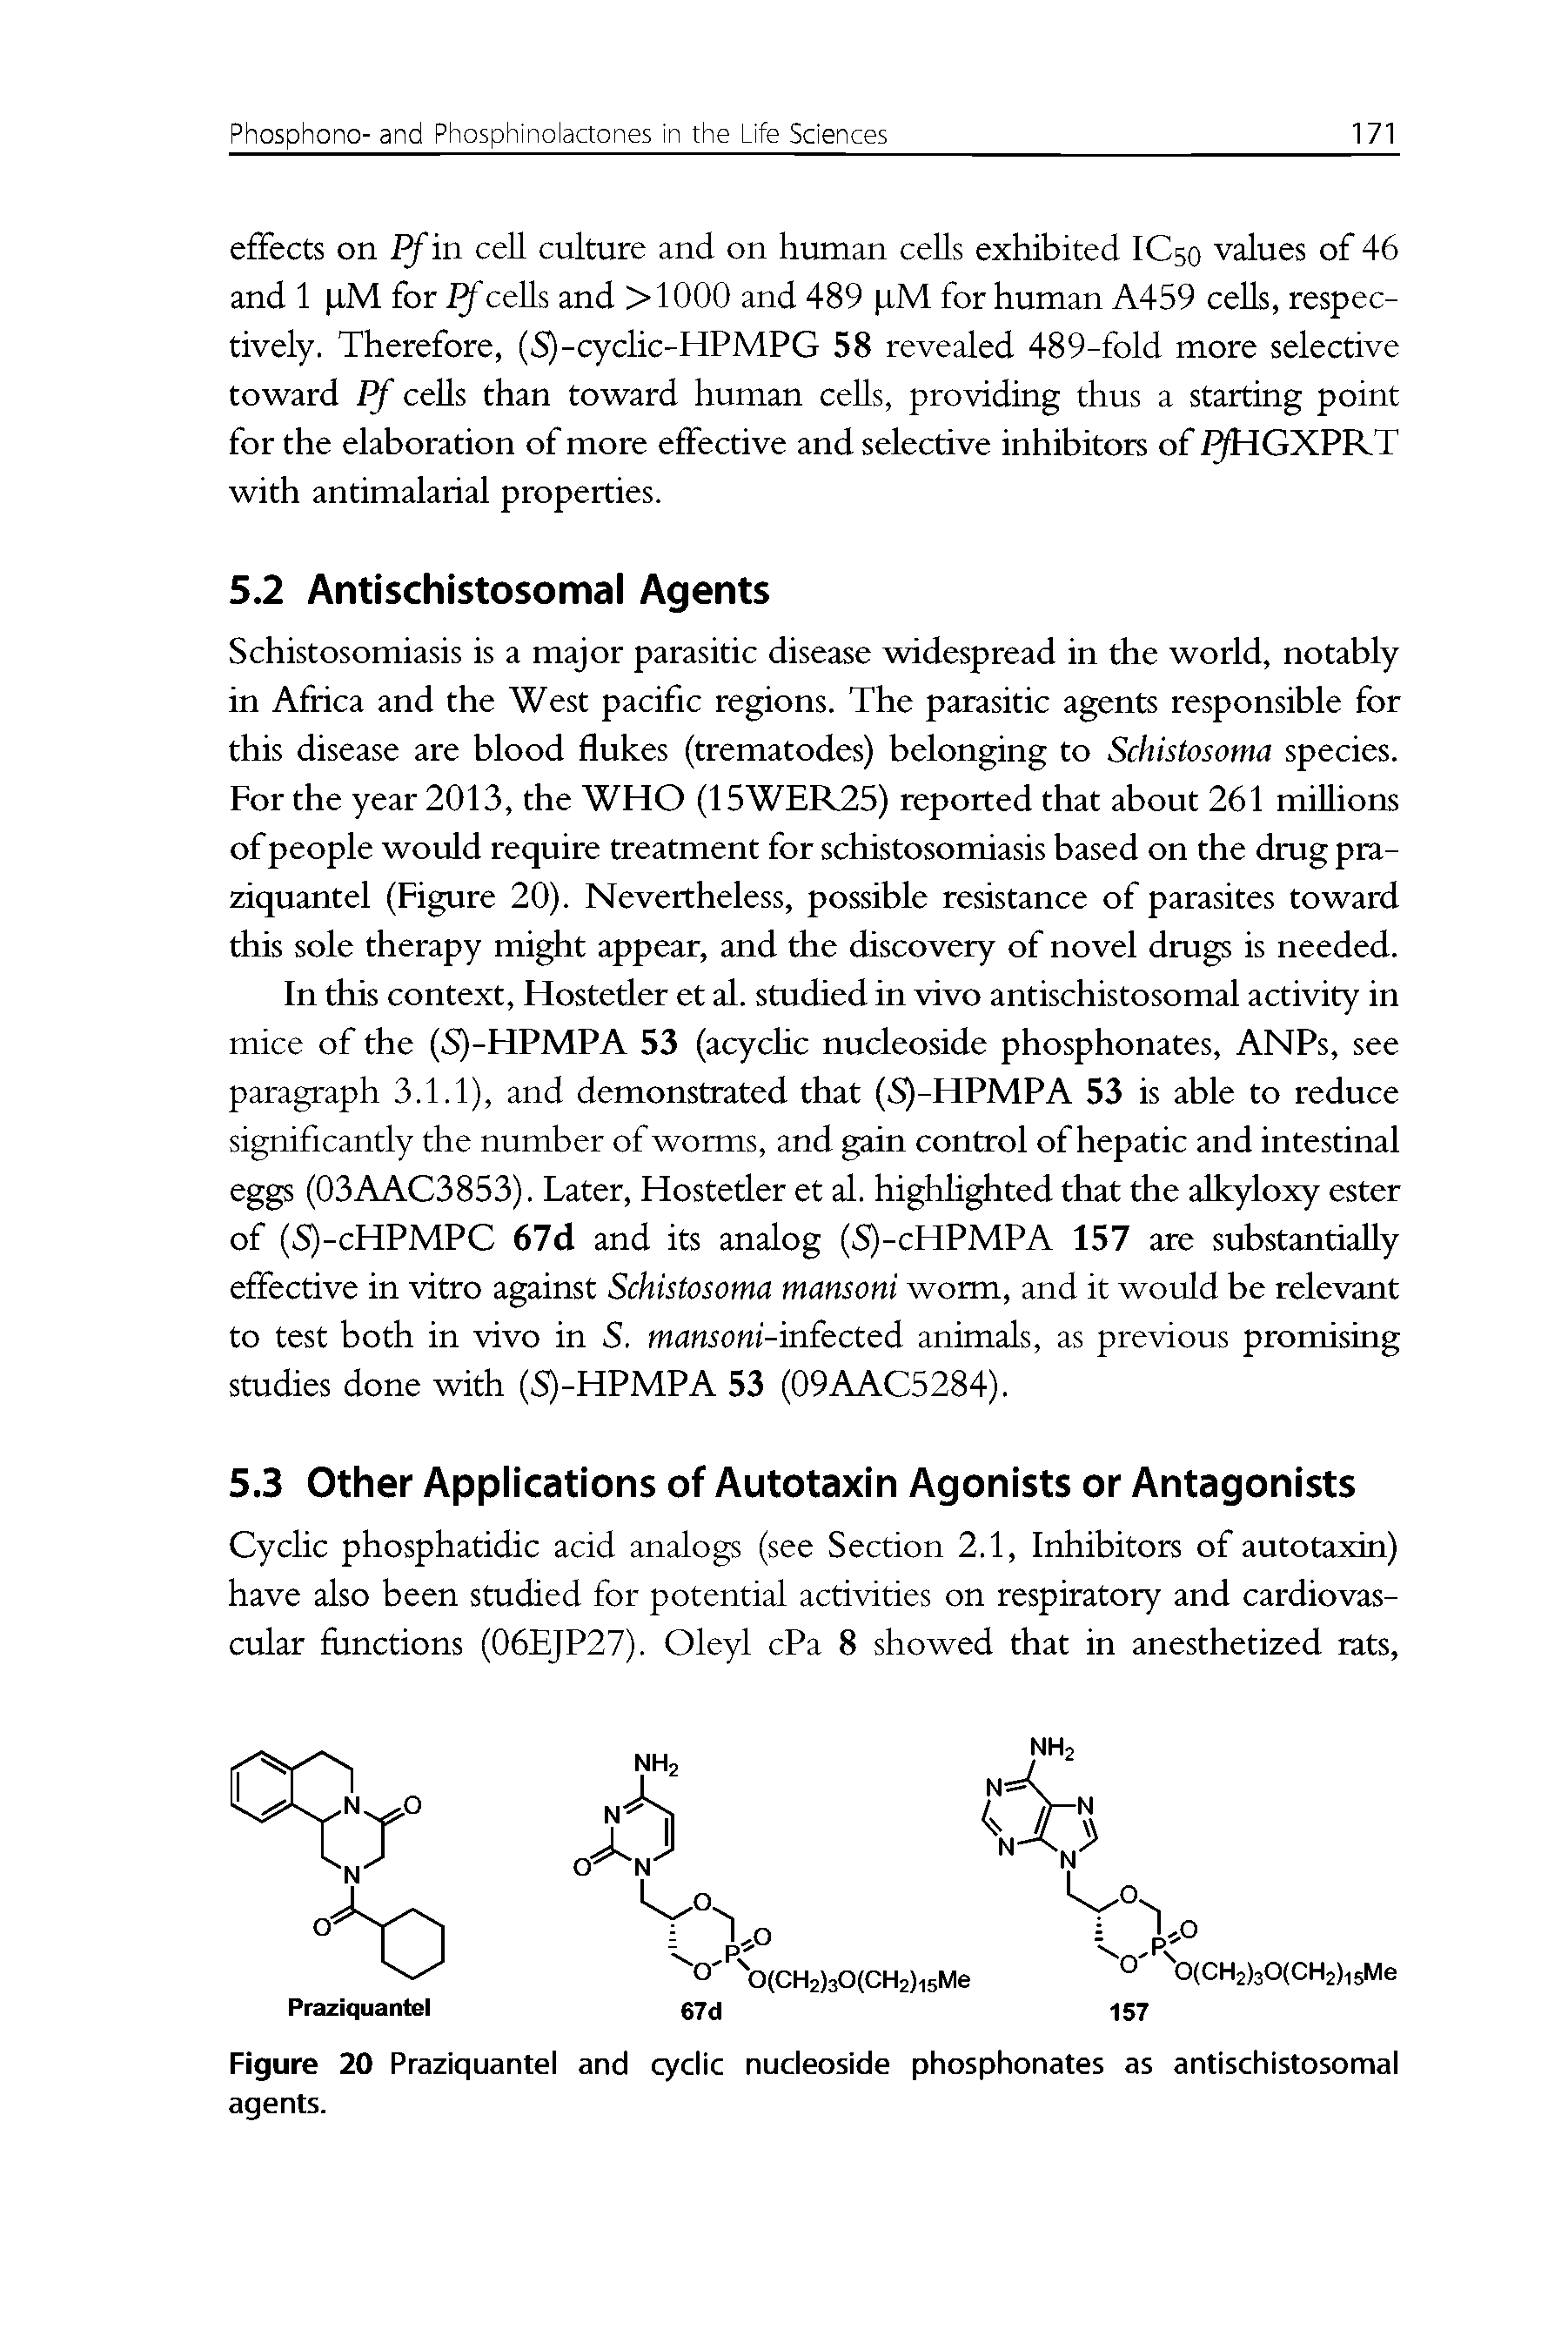 Figure 20 Praziquantel and cyclic nucleoside phosphonates as antischistosomal agents.